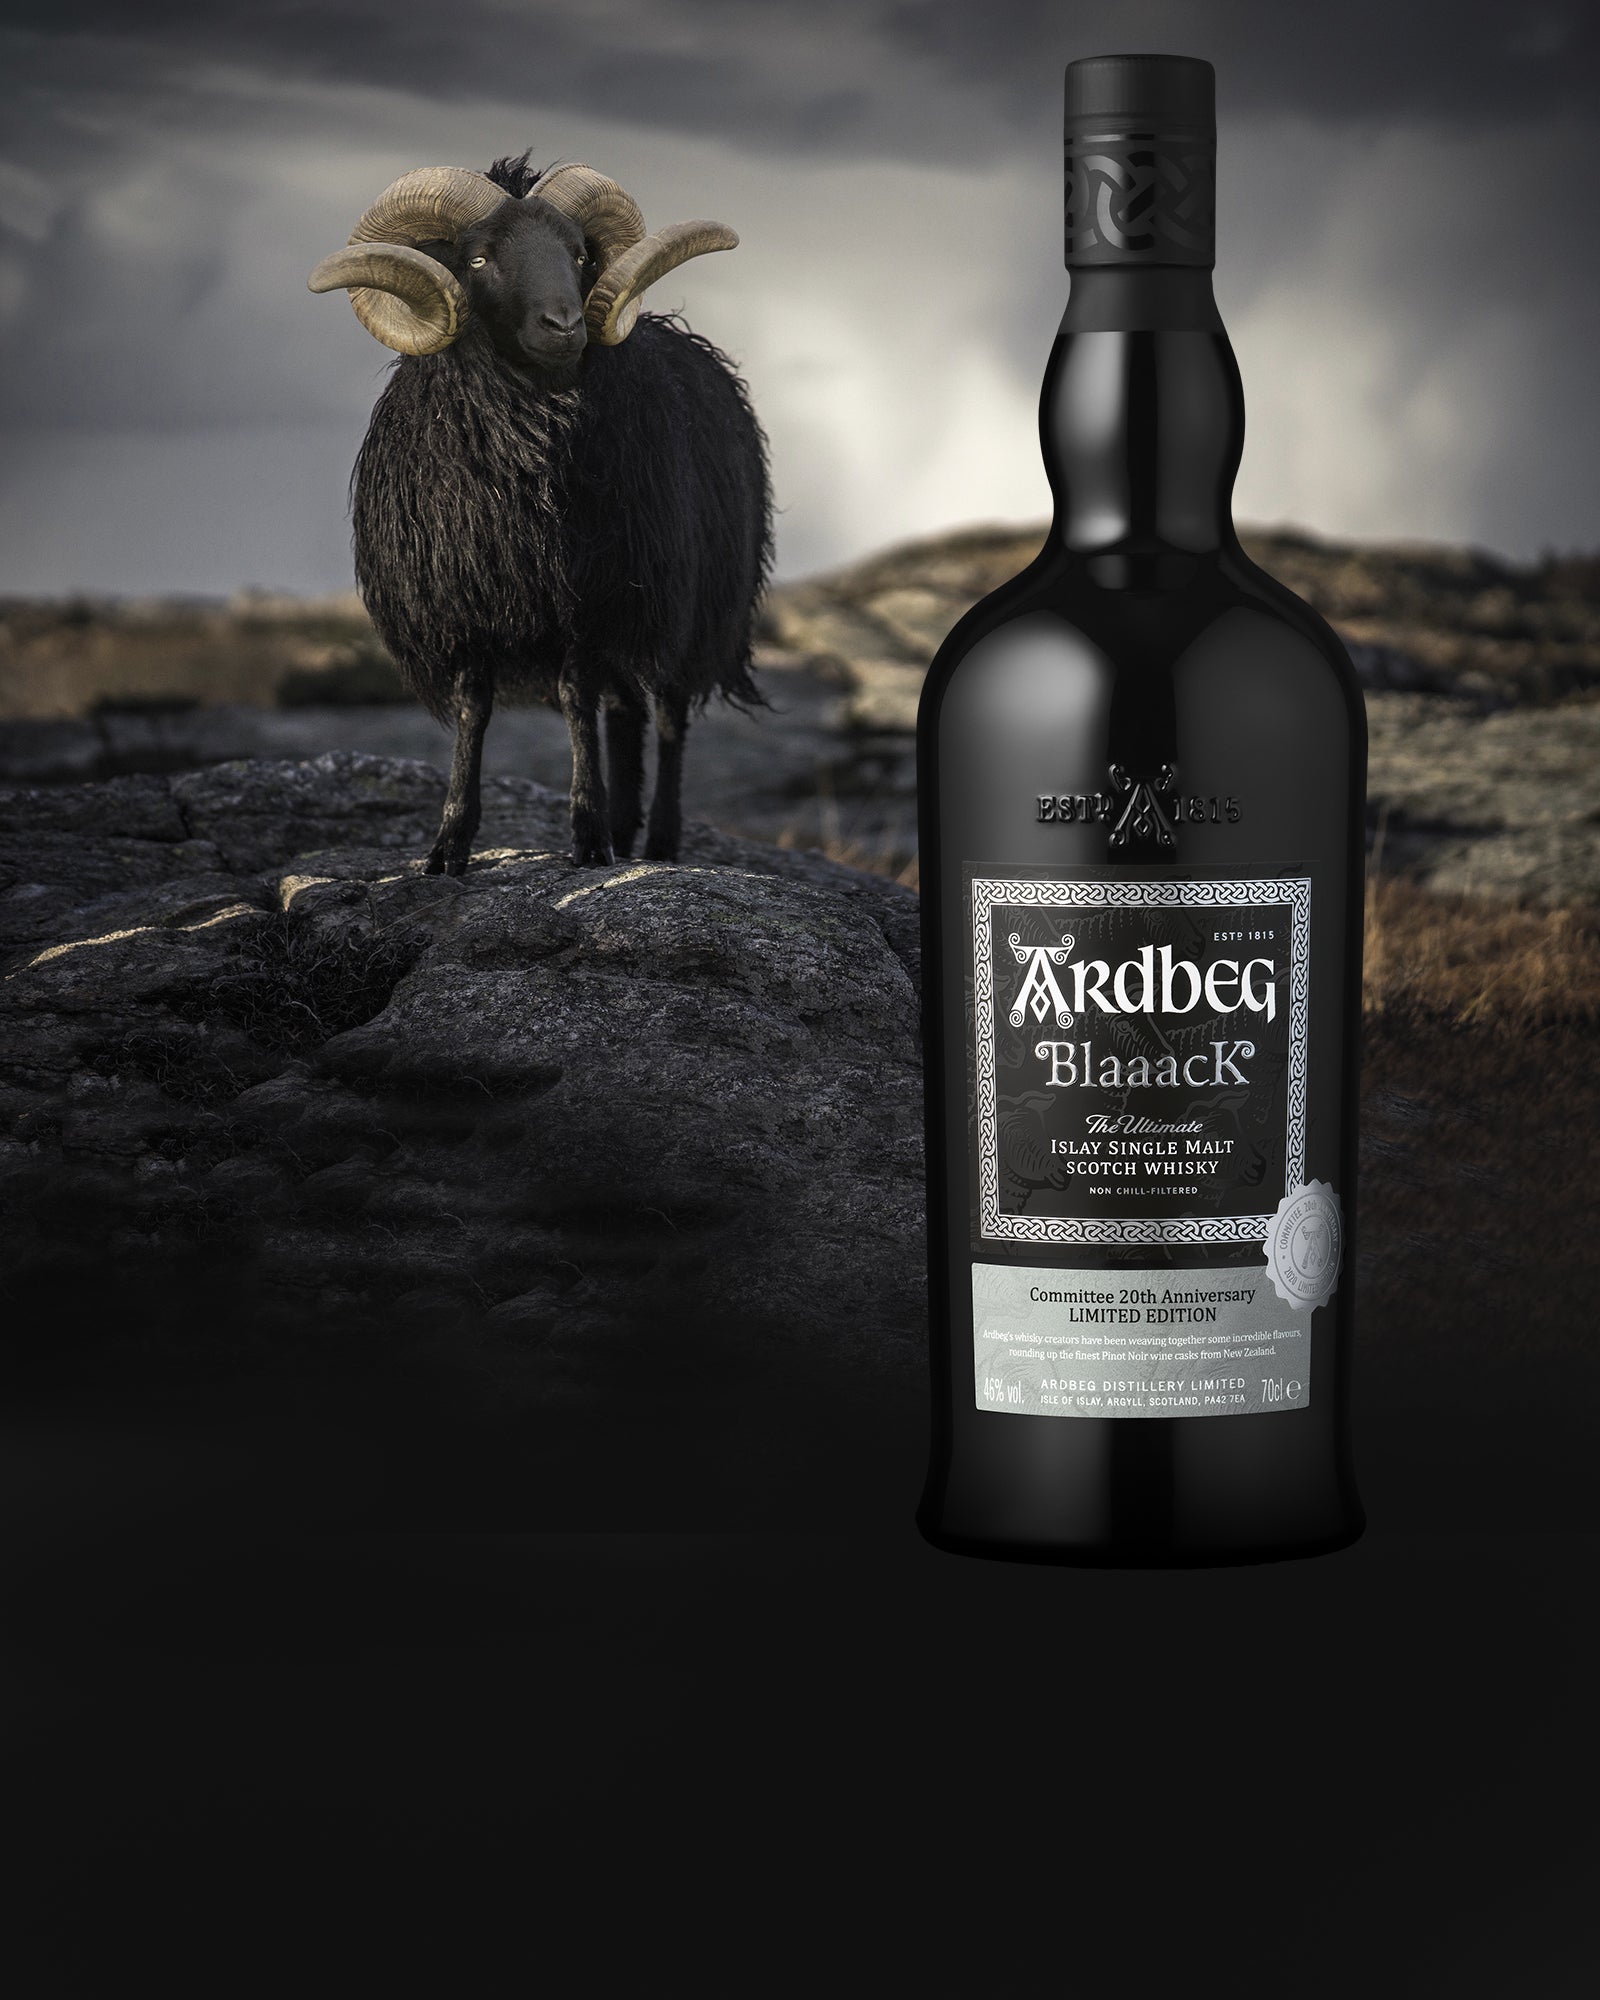 Ardbeg Blaaack Islay single malt scotch whisky